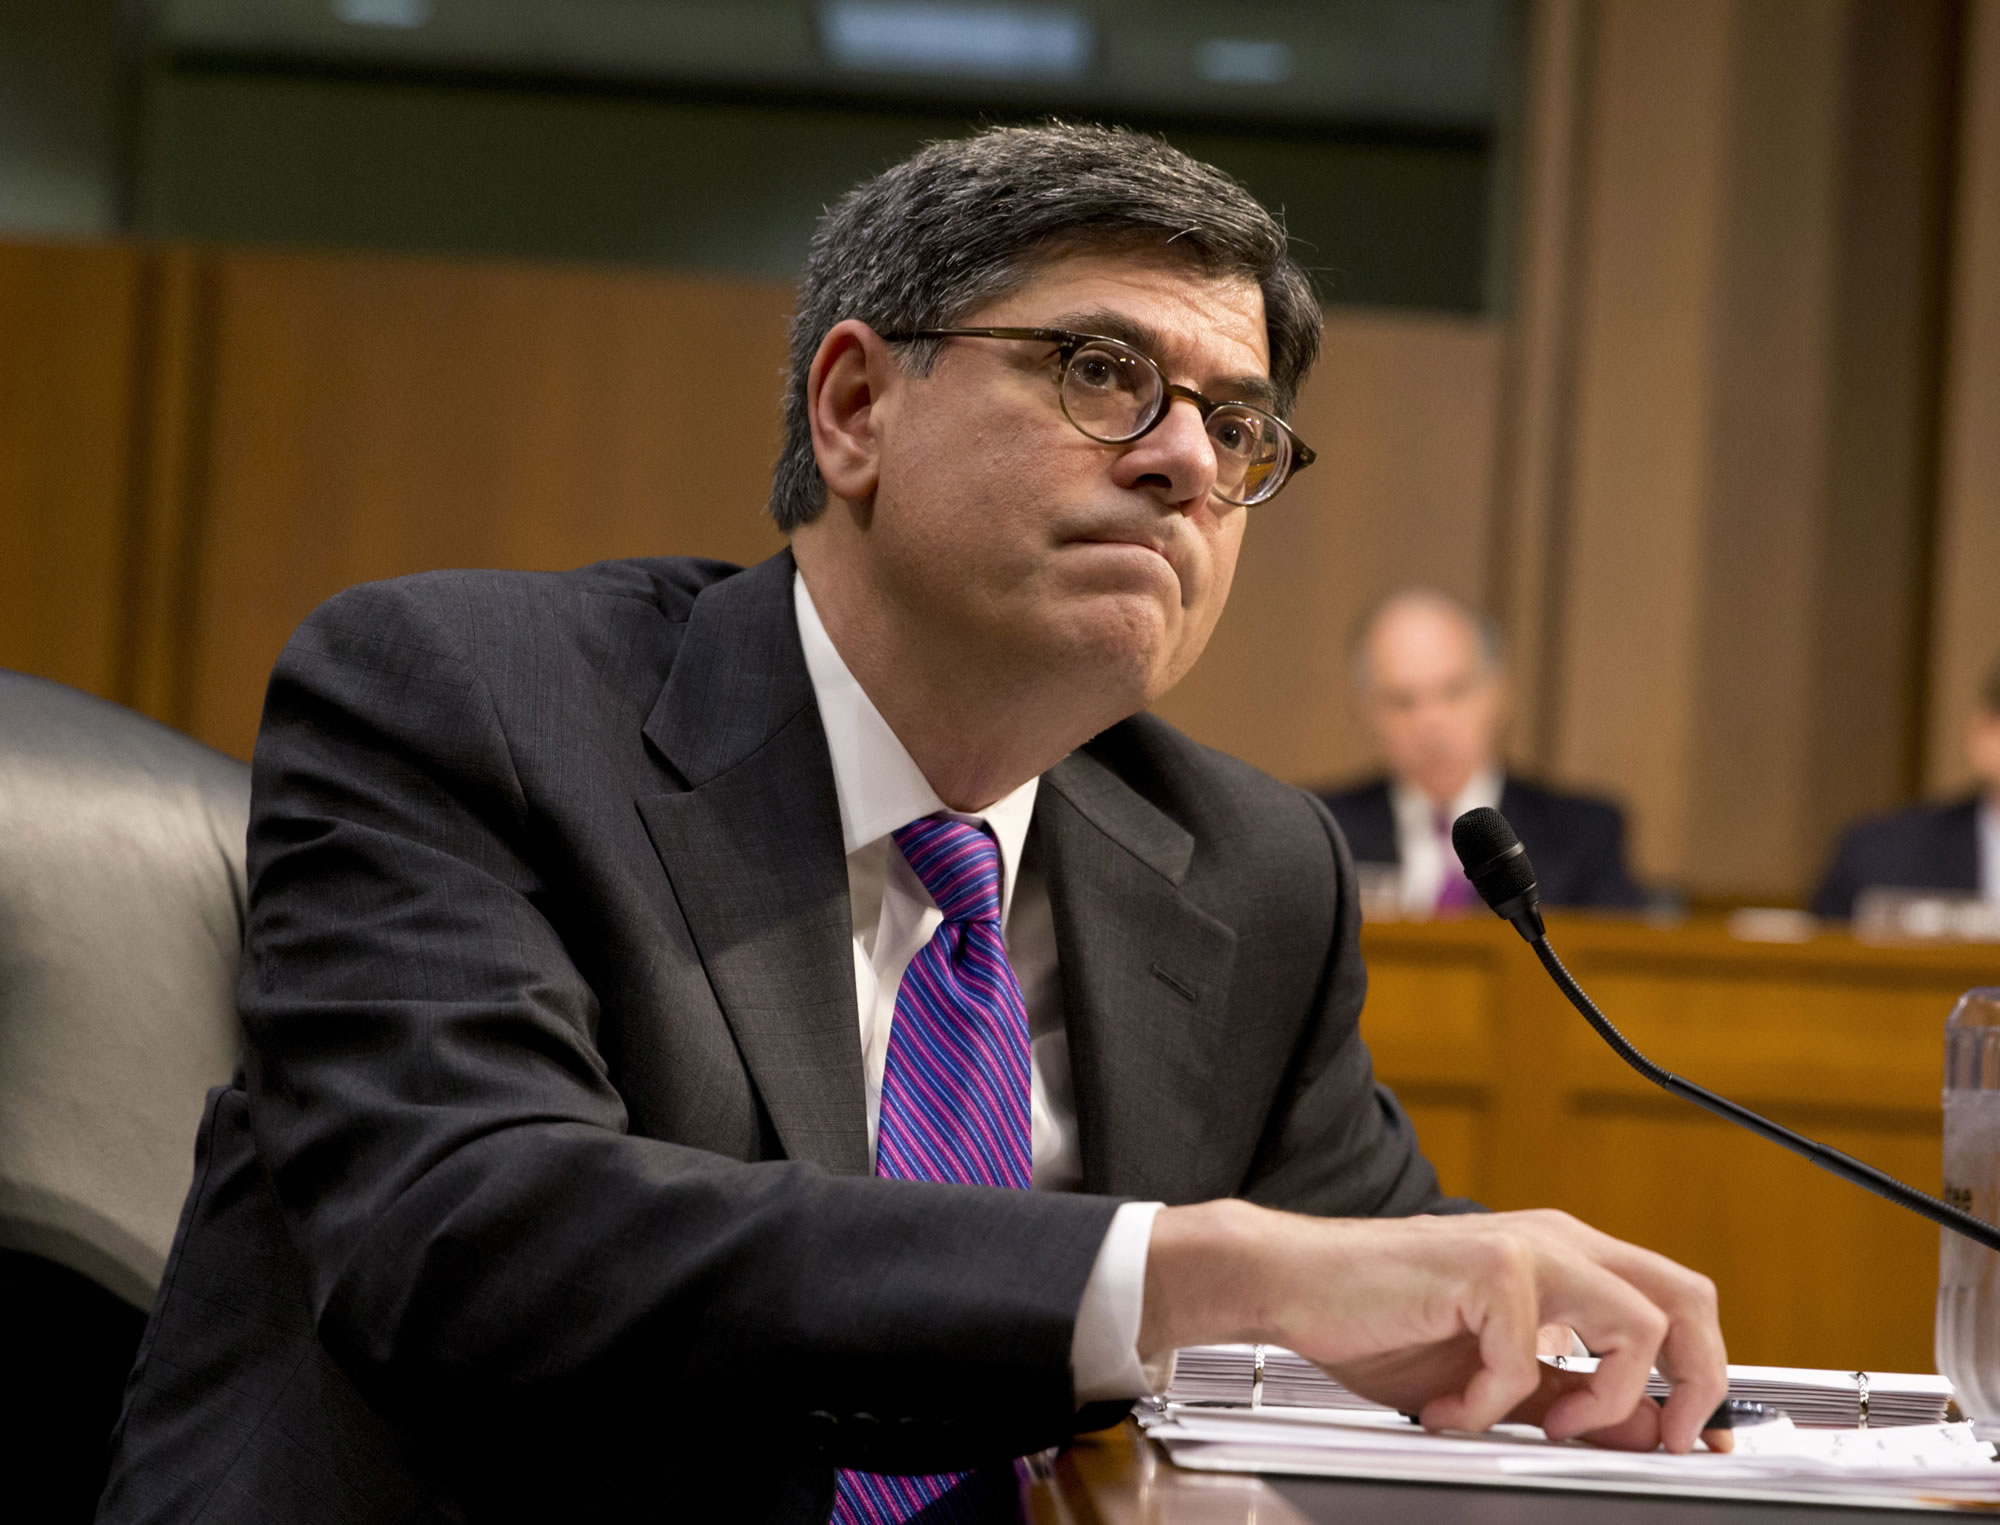 Treasury Secretary Jacob Lew listens while testifying on Capitol Hill in Washington.